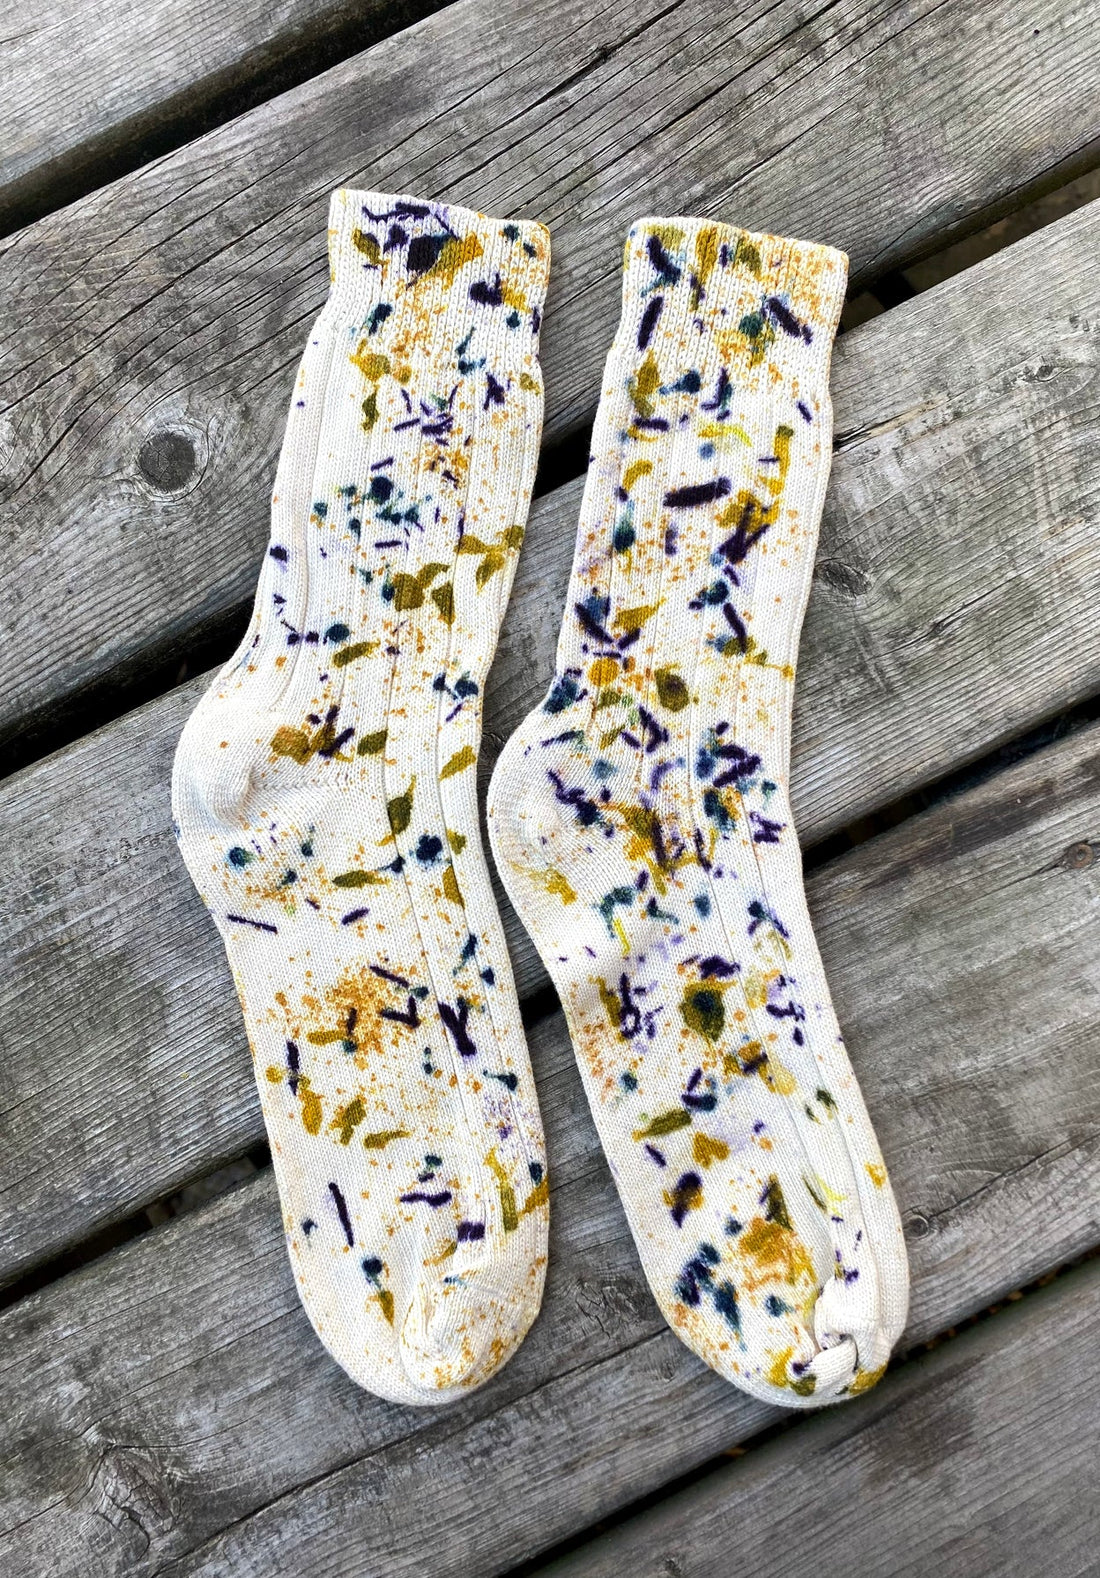 Floral print cotton socks by Marie-les-bains